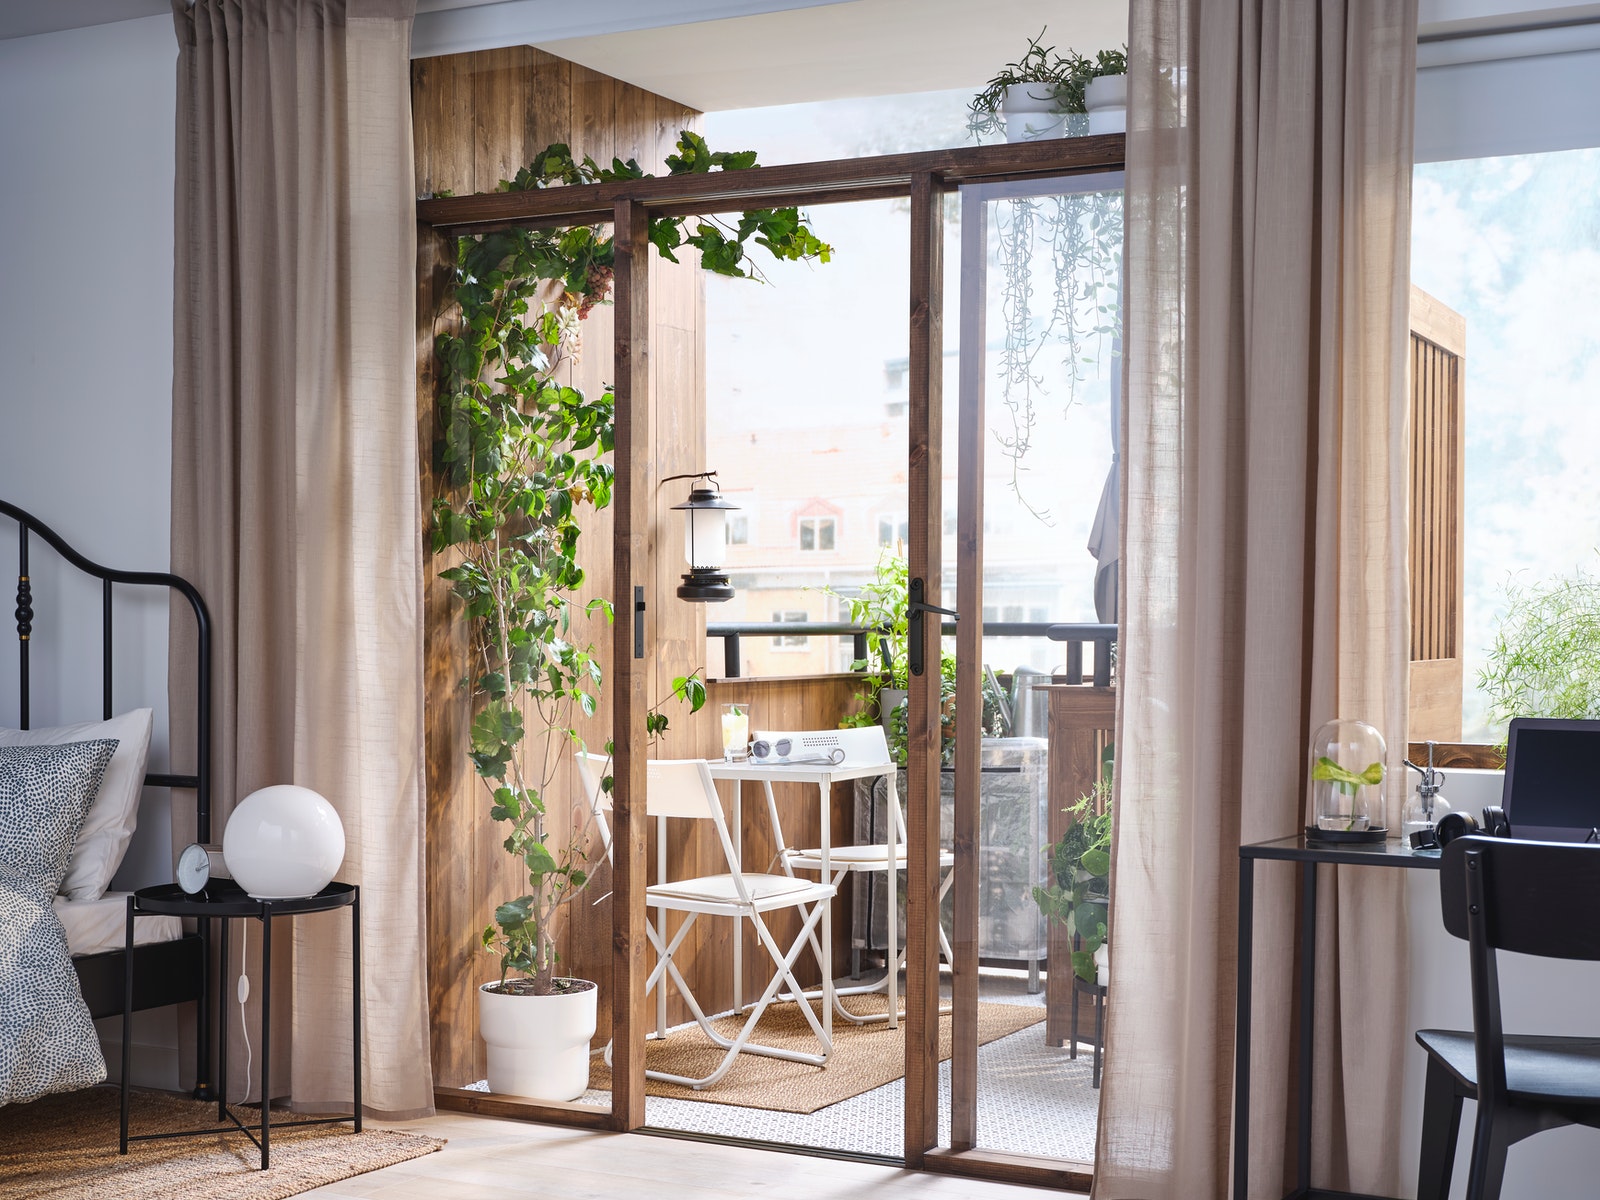 IKEA - A small balcony where big dreams happen